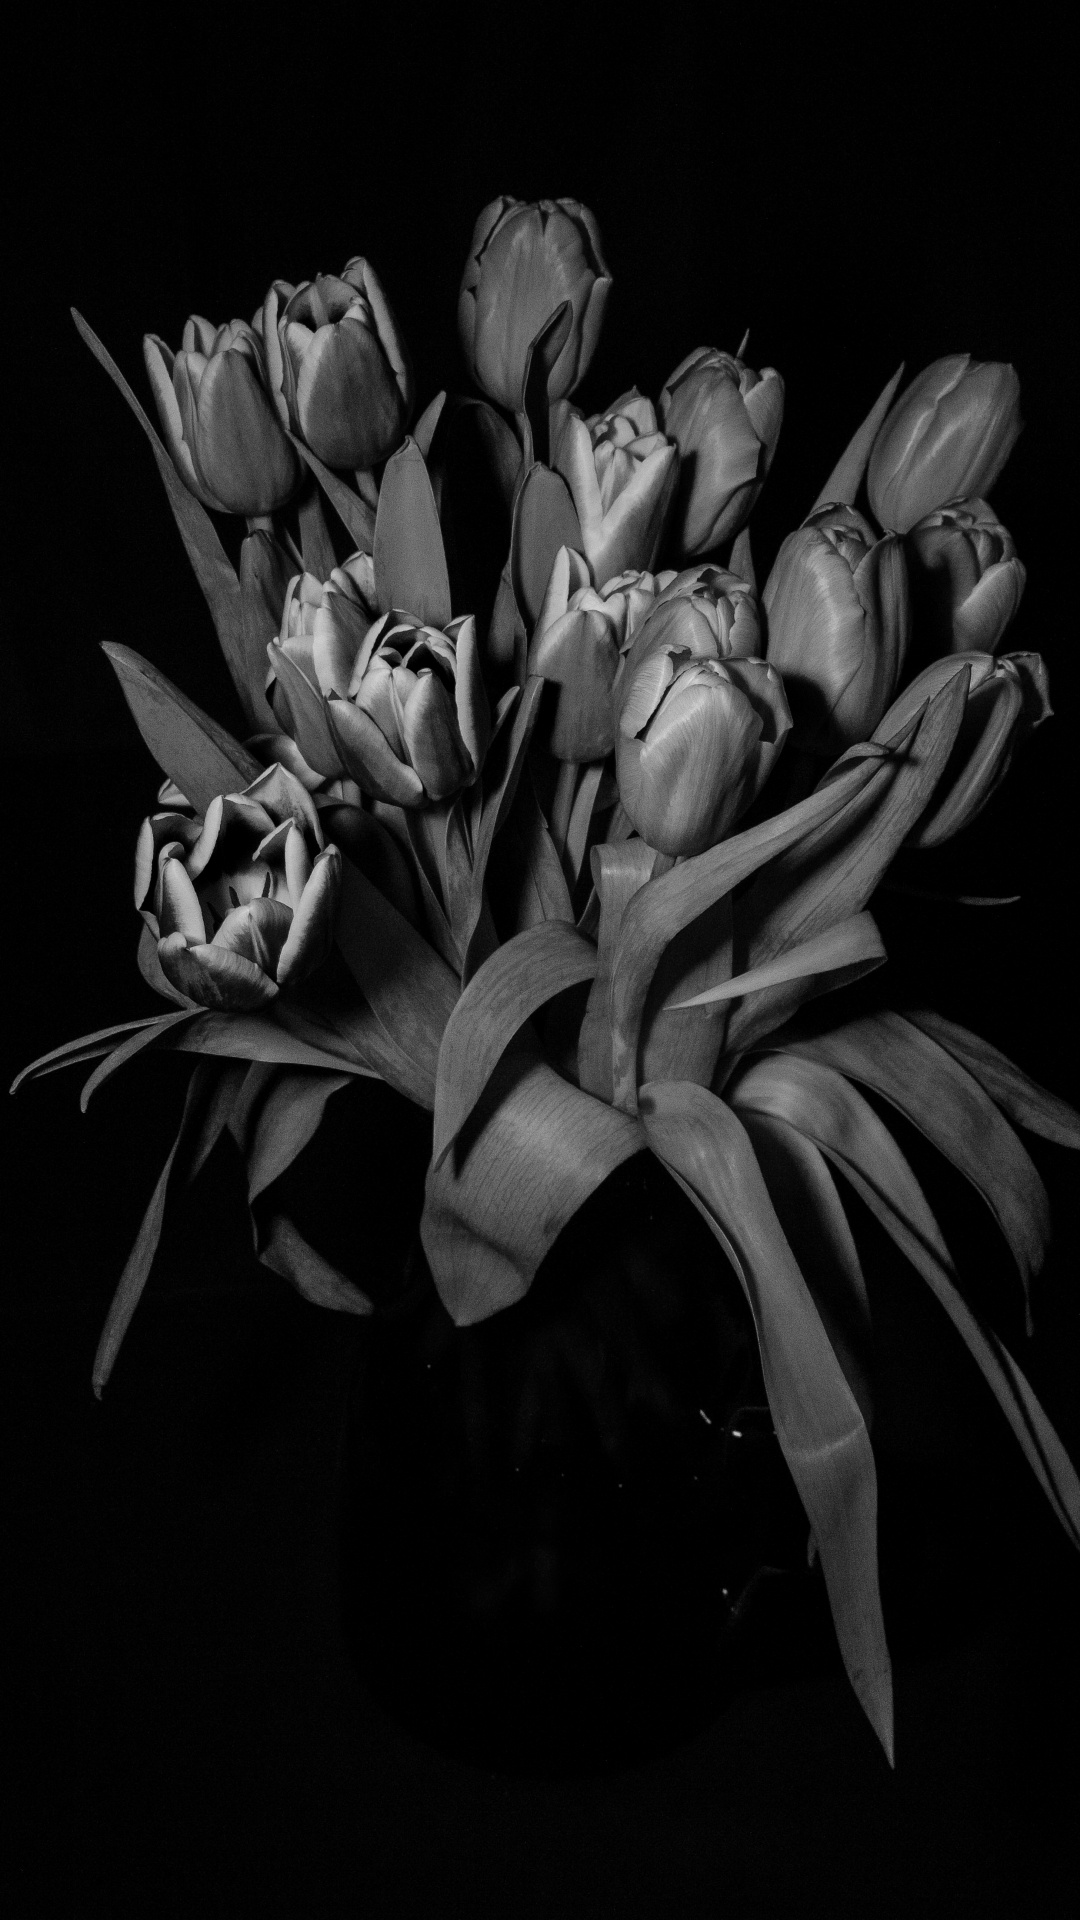 Photo en Niveaux de Gris de Tulipes en Fleurs. Wallpaper in 1080x1920 Resolution